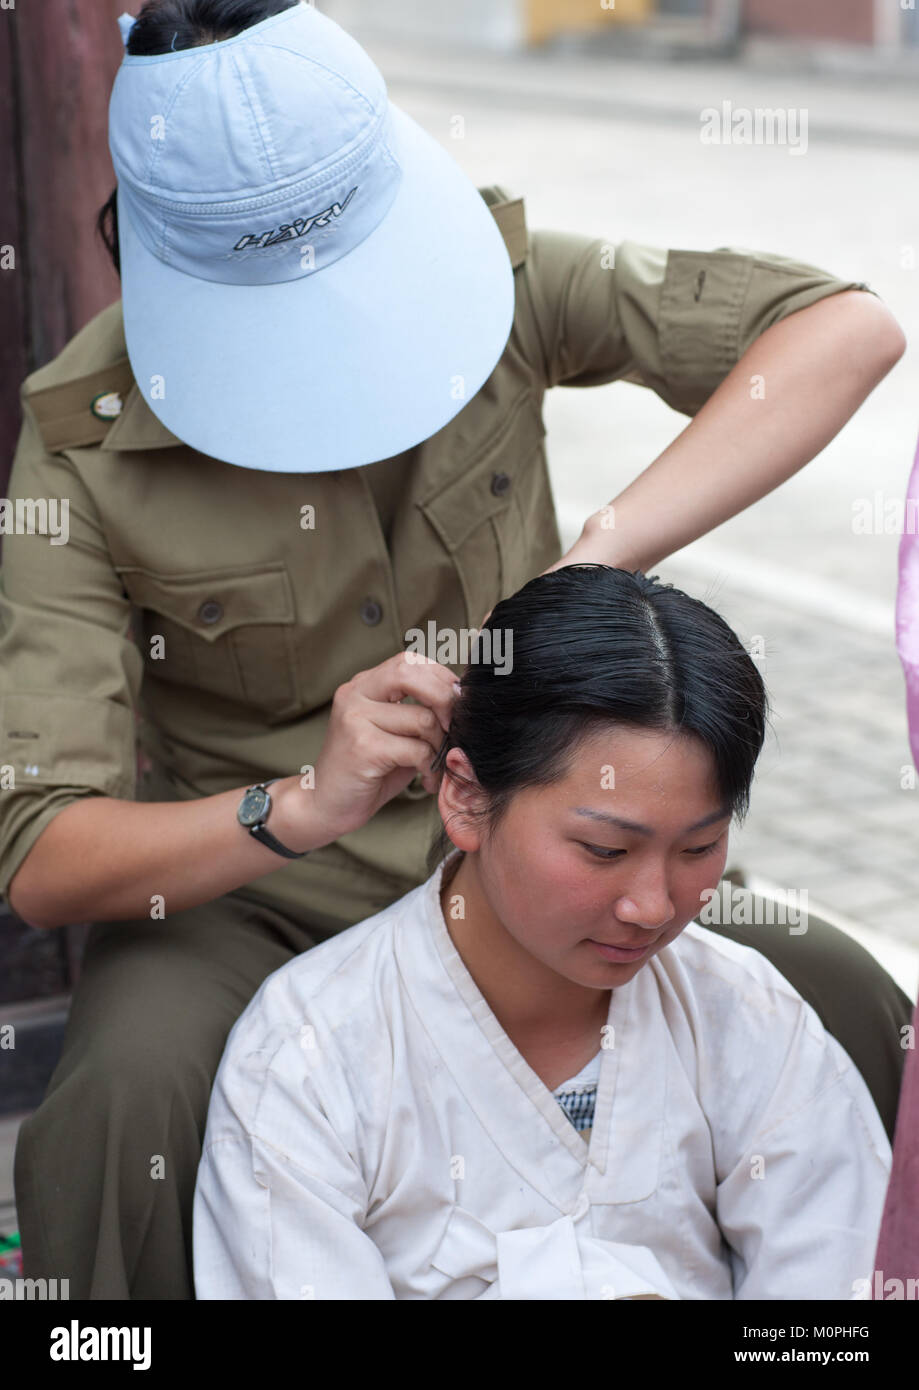 Schauspielerin Make-up während des Films schießen in Pjöngjang Film Studios, Pyongan Provinz, Pyongyang, Nordkorea Stockfoto